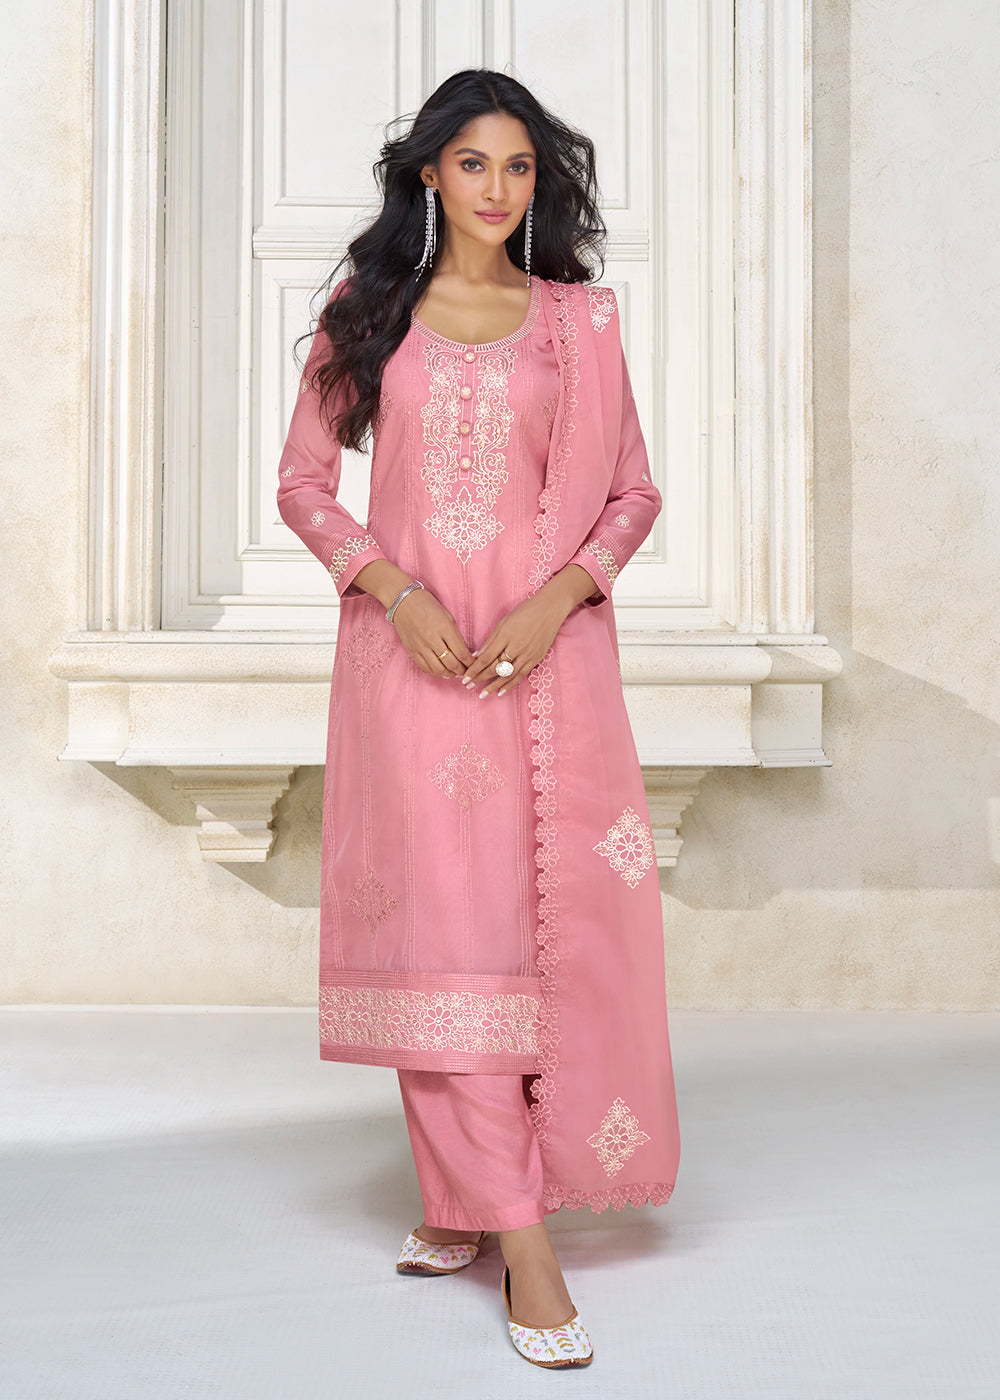 Buy Now Pastel Pink Organza Silk Designer Salwar Suit Online in USA, UK, Canada, Germany, Australia & Worldwide at Empress Clothing.